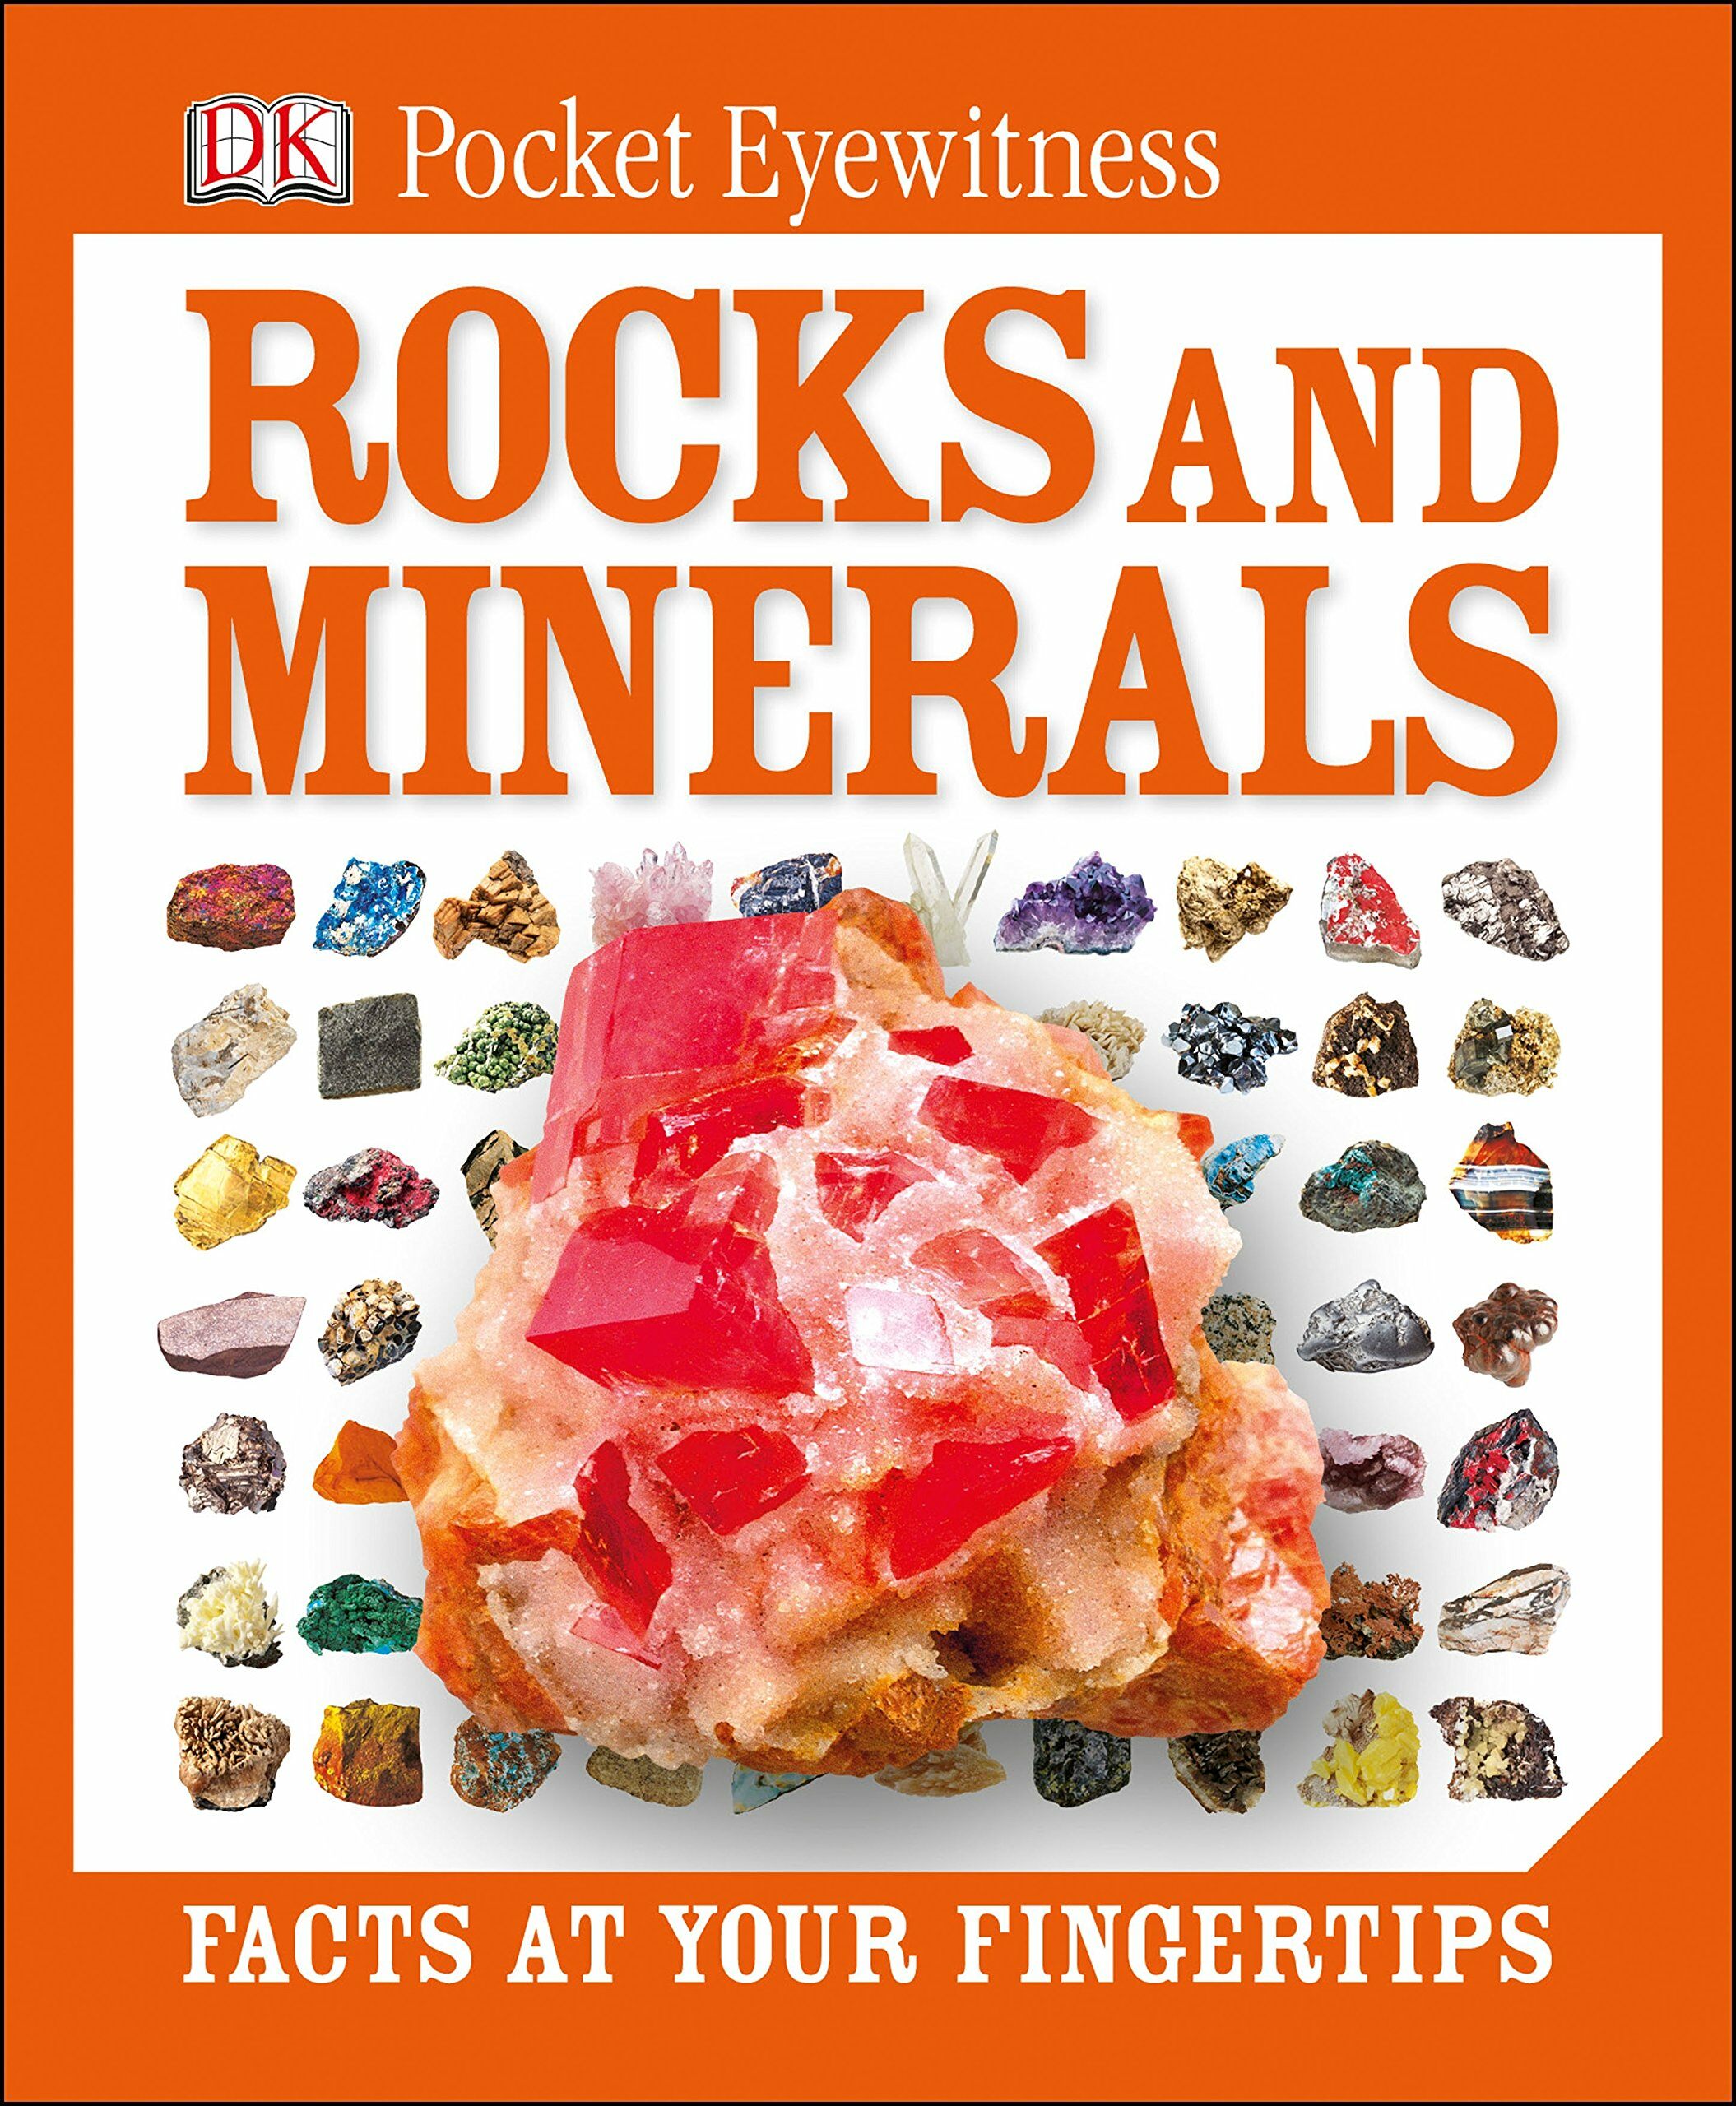 DK Pocket Eyewitness : Rocks and Minerals (Hardcover)